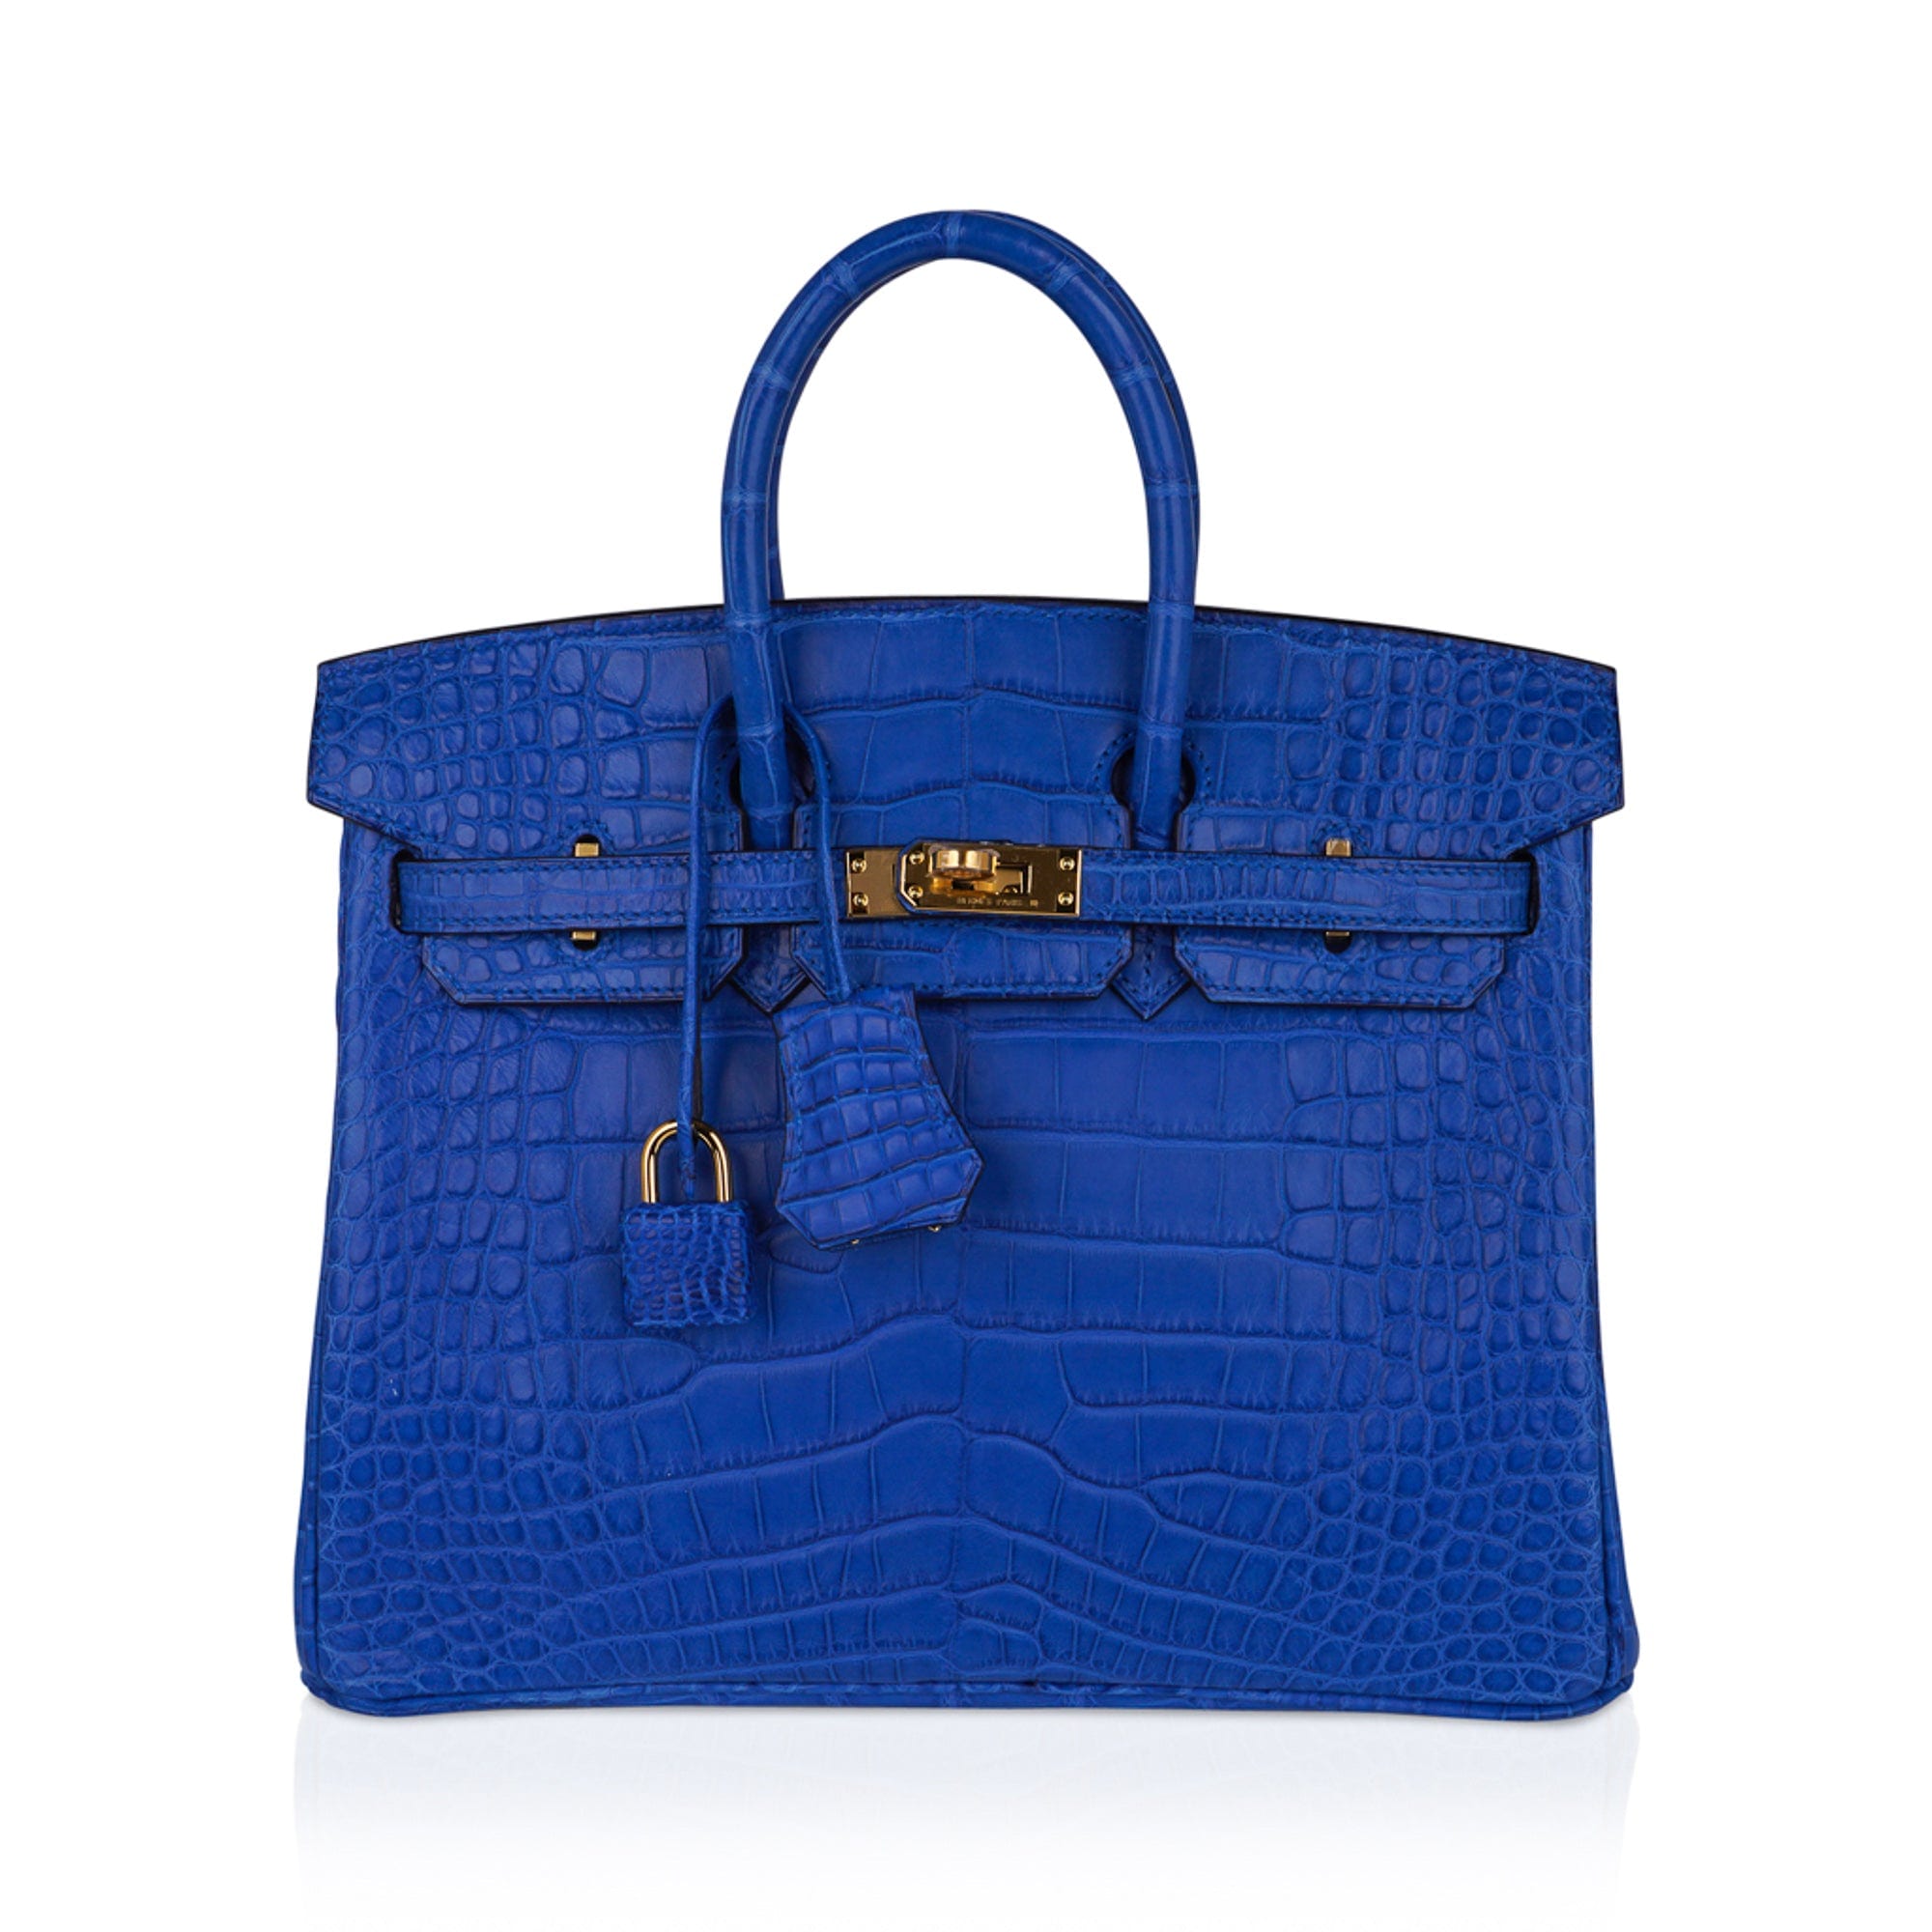 Gorgeous Cobalt Blue Michael Kors Handbag for Sale in Miami, FL